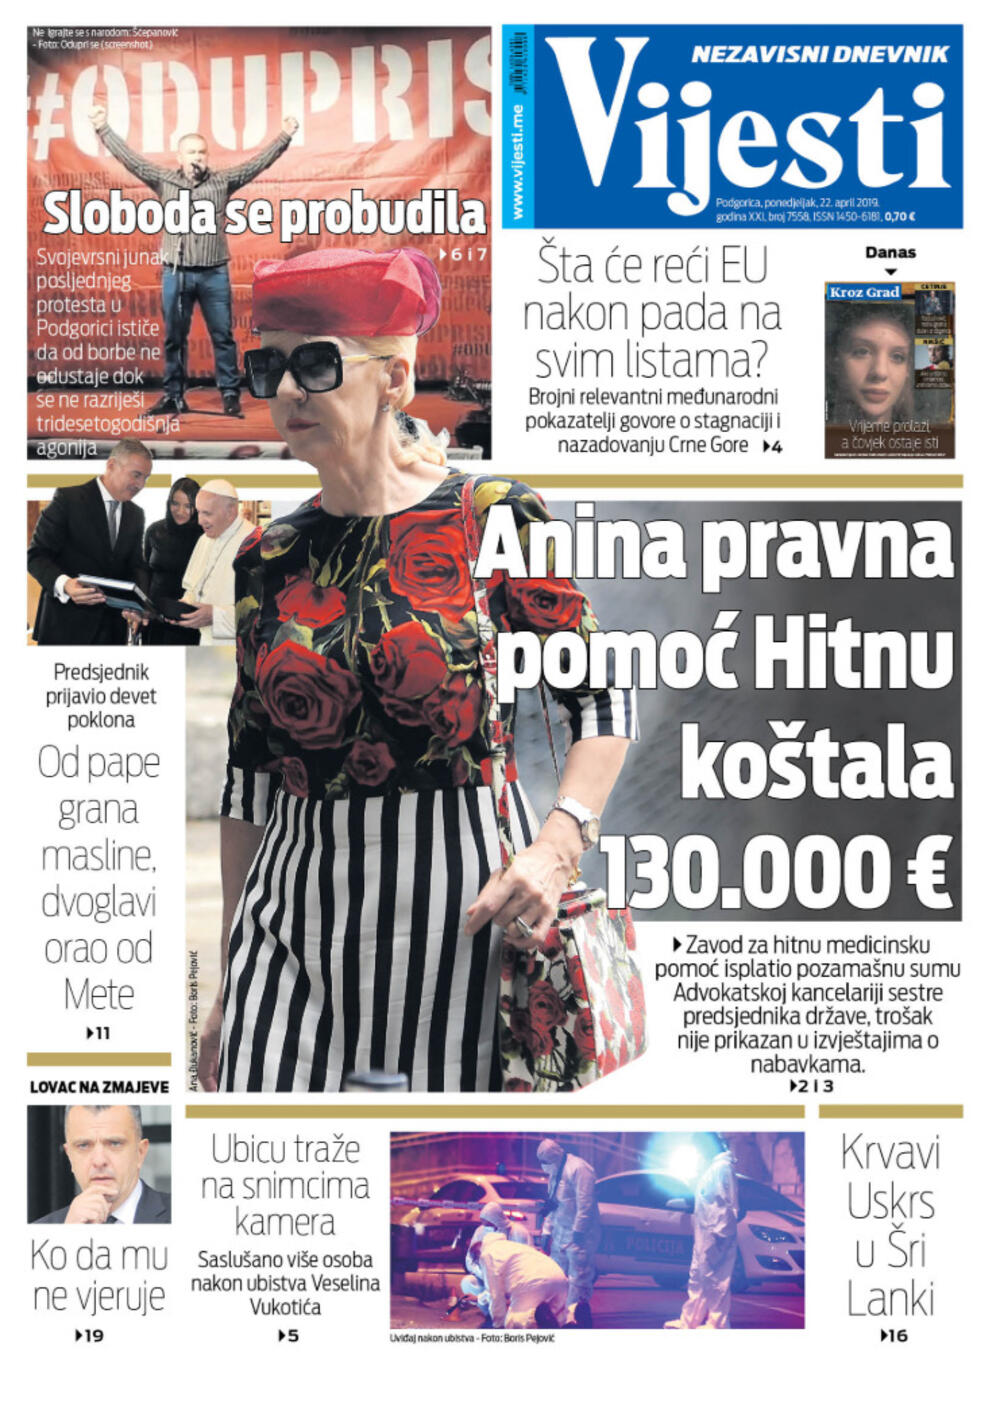 Naslovna strana "Vijesti" za 22. april